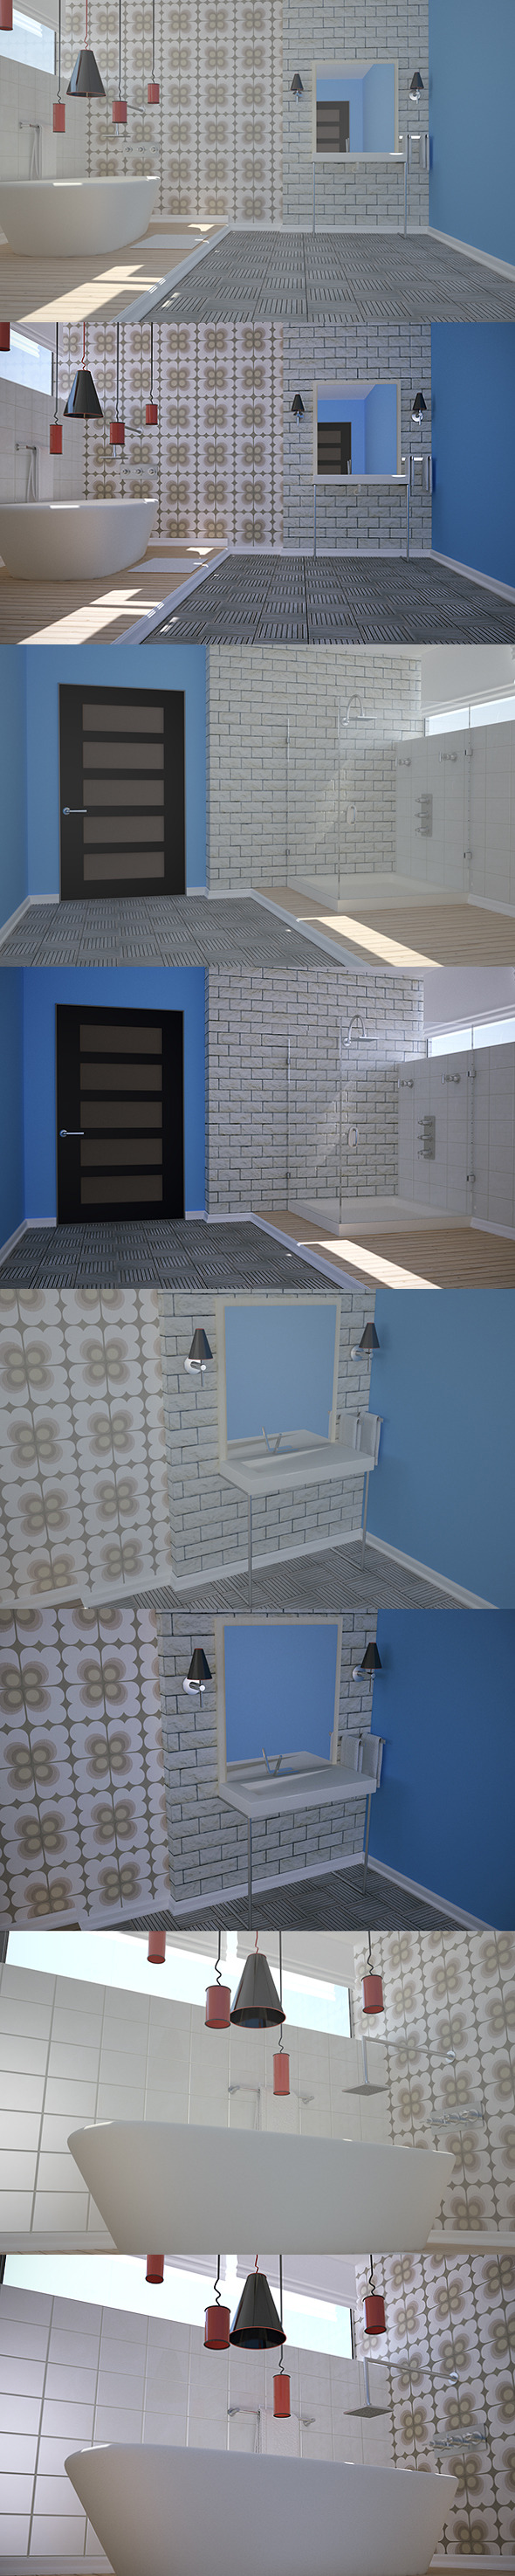 Bathroom Design (VrayC4D) - 3Docean 5130237